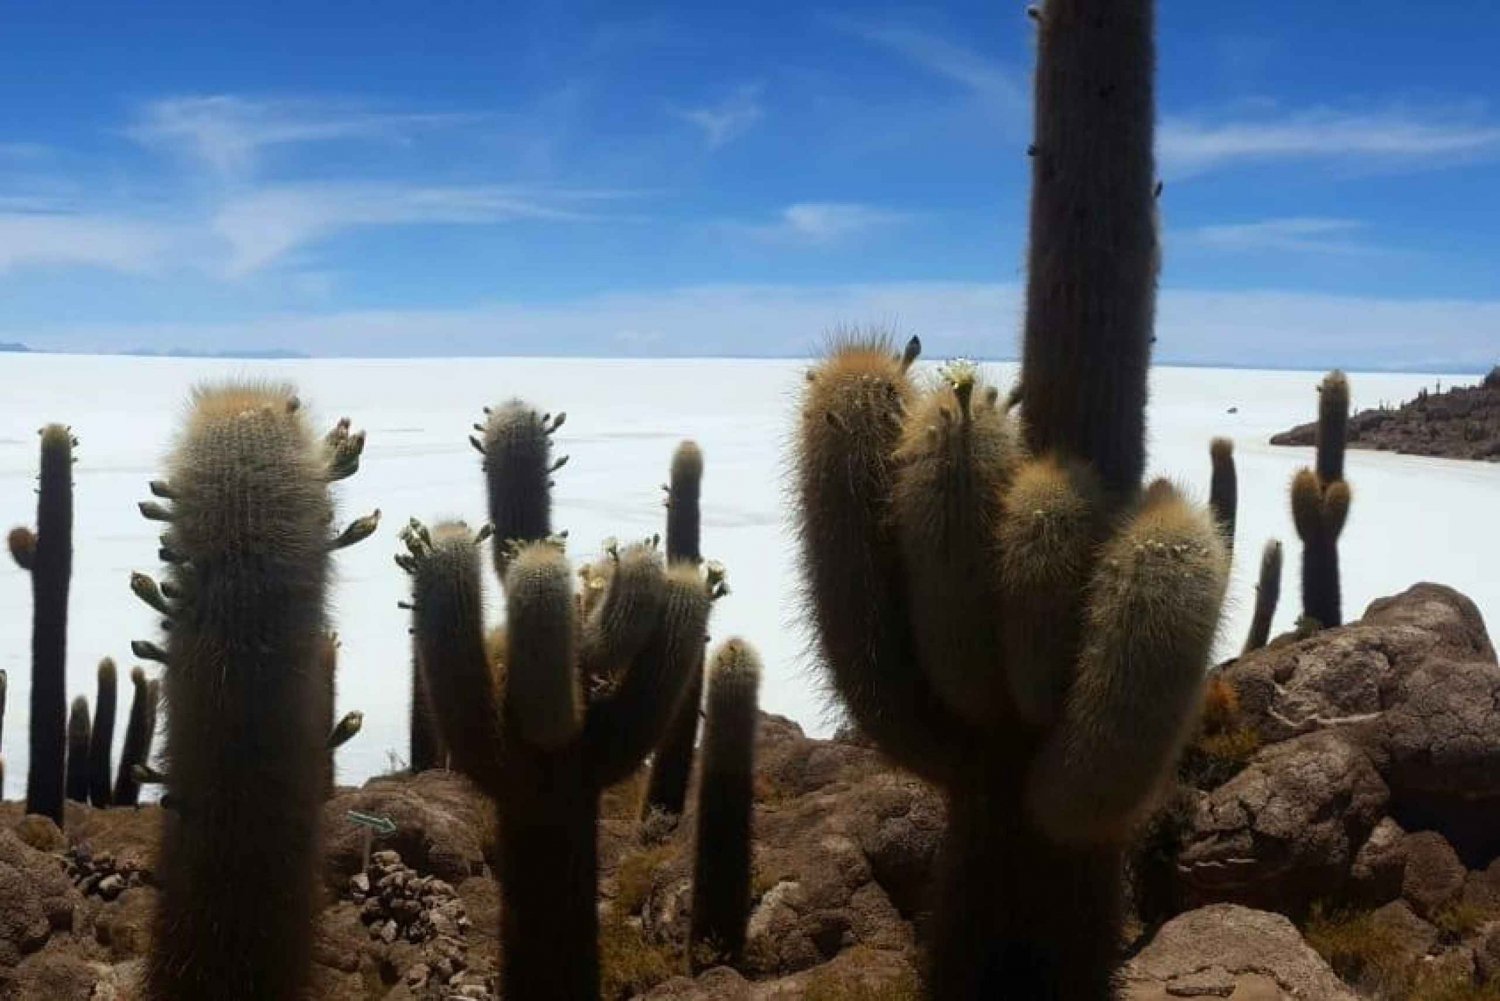 Uyuni zoutvlakte Privéreis vanuit Chili in hostels